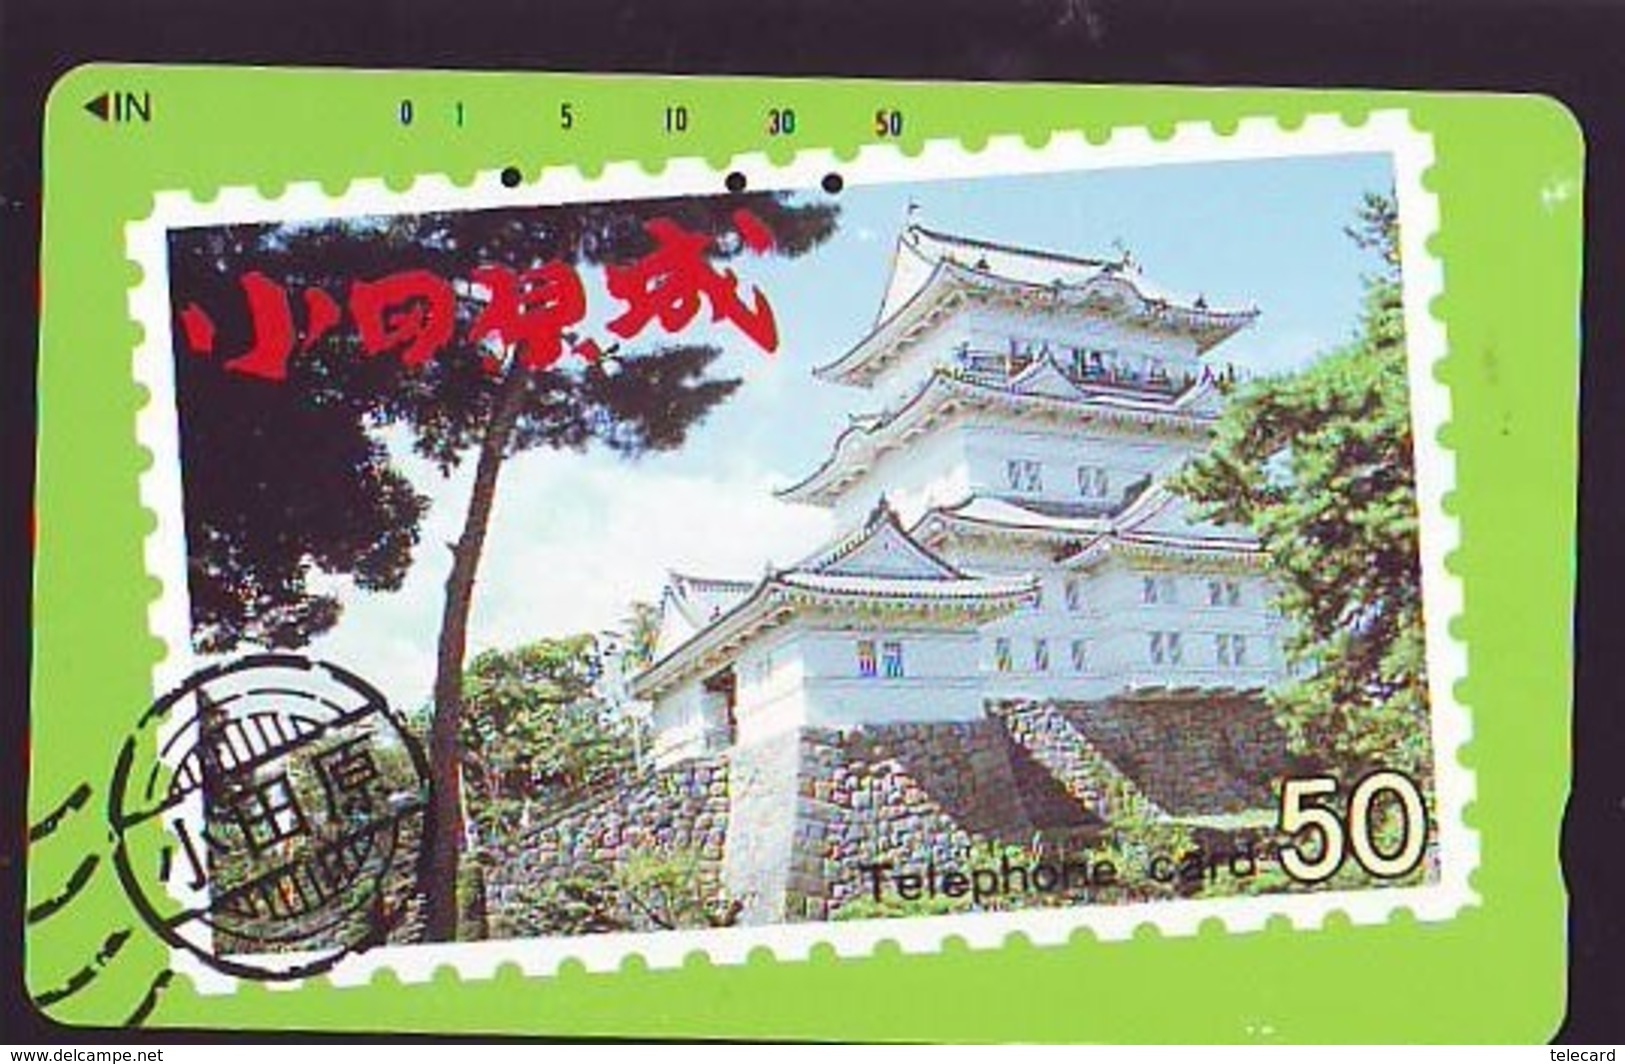 Télécarte Japon * Stamp & Phonecard On Japan Phonecard (304)  Timbre + Télécarte *  Briefmarke & TK - Timbres & Monnaies